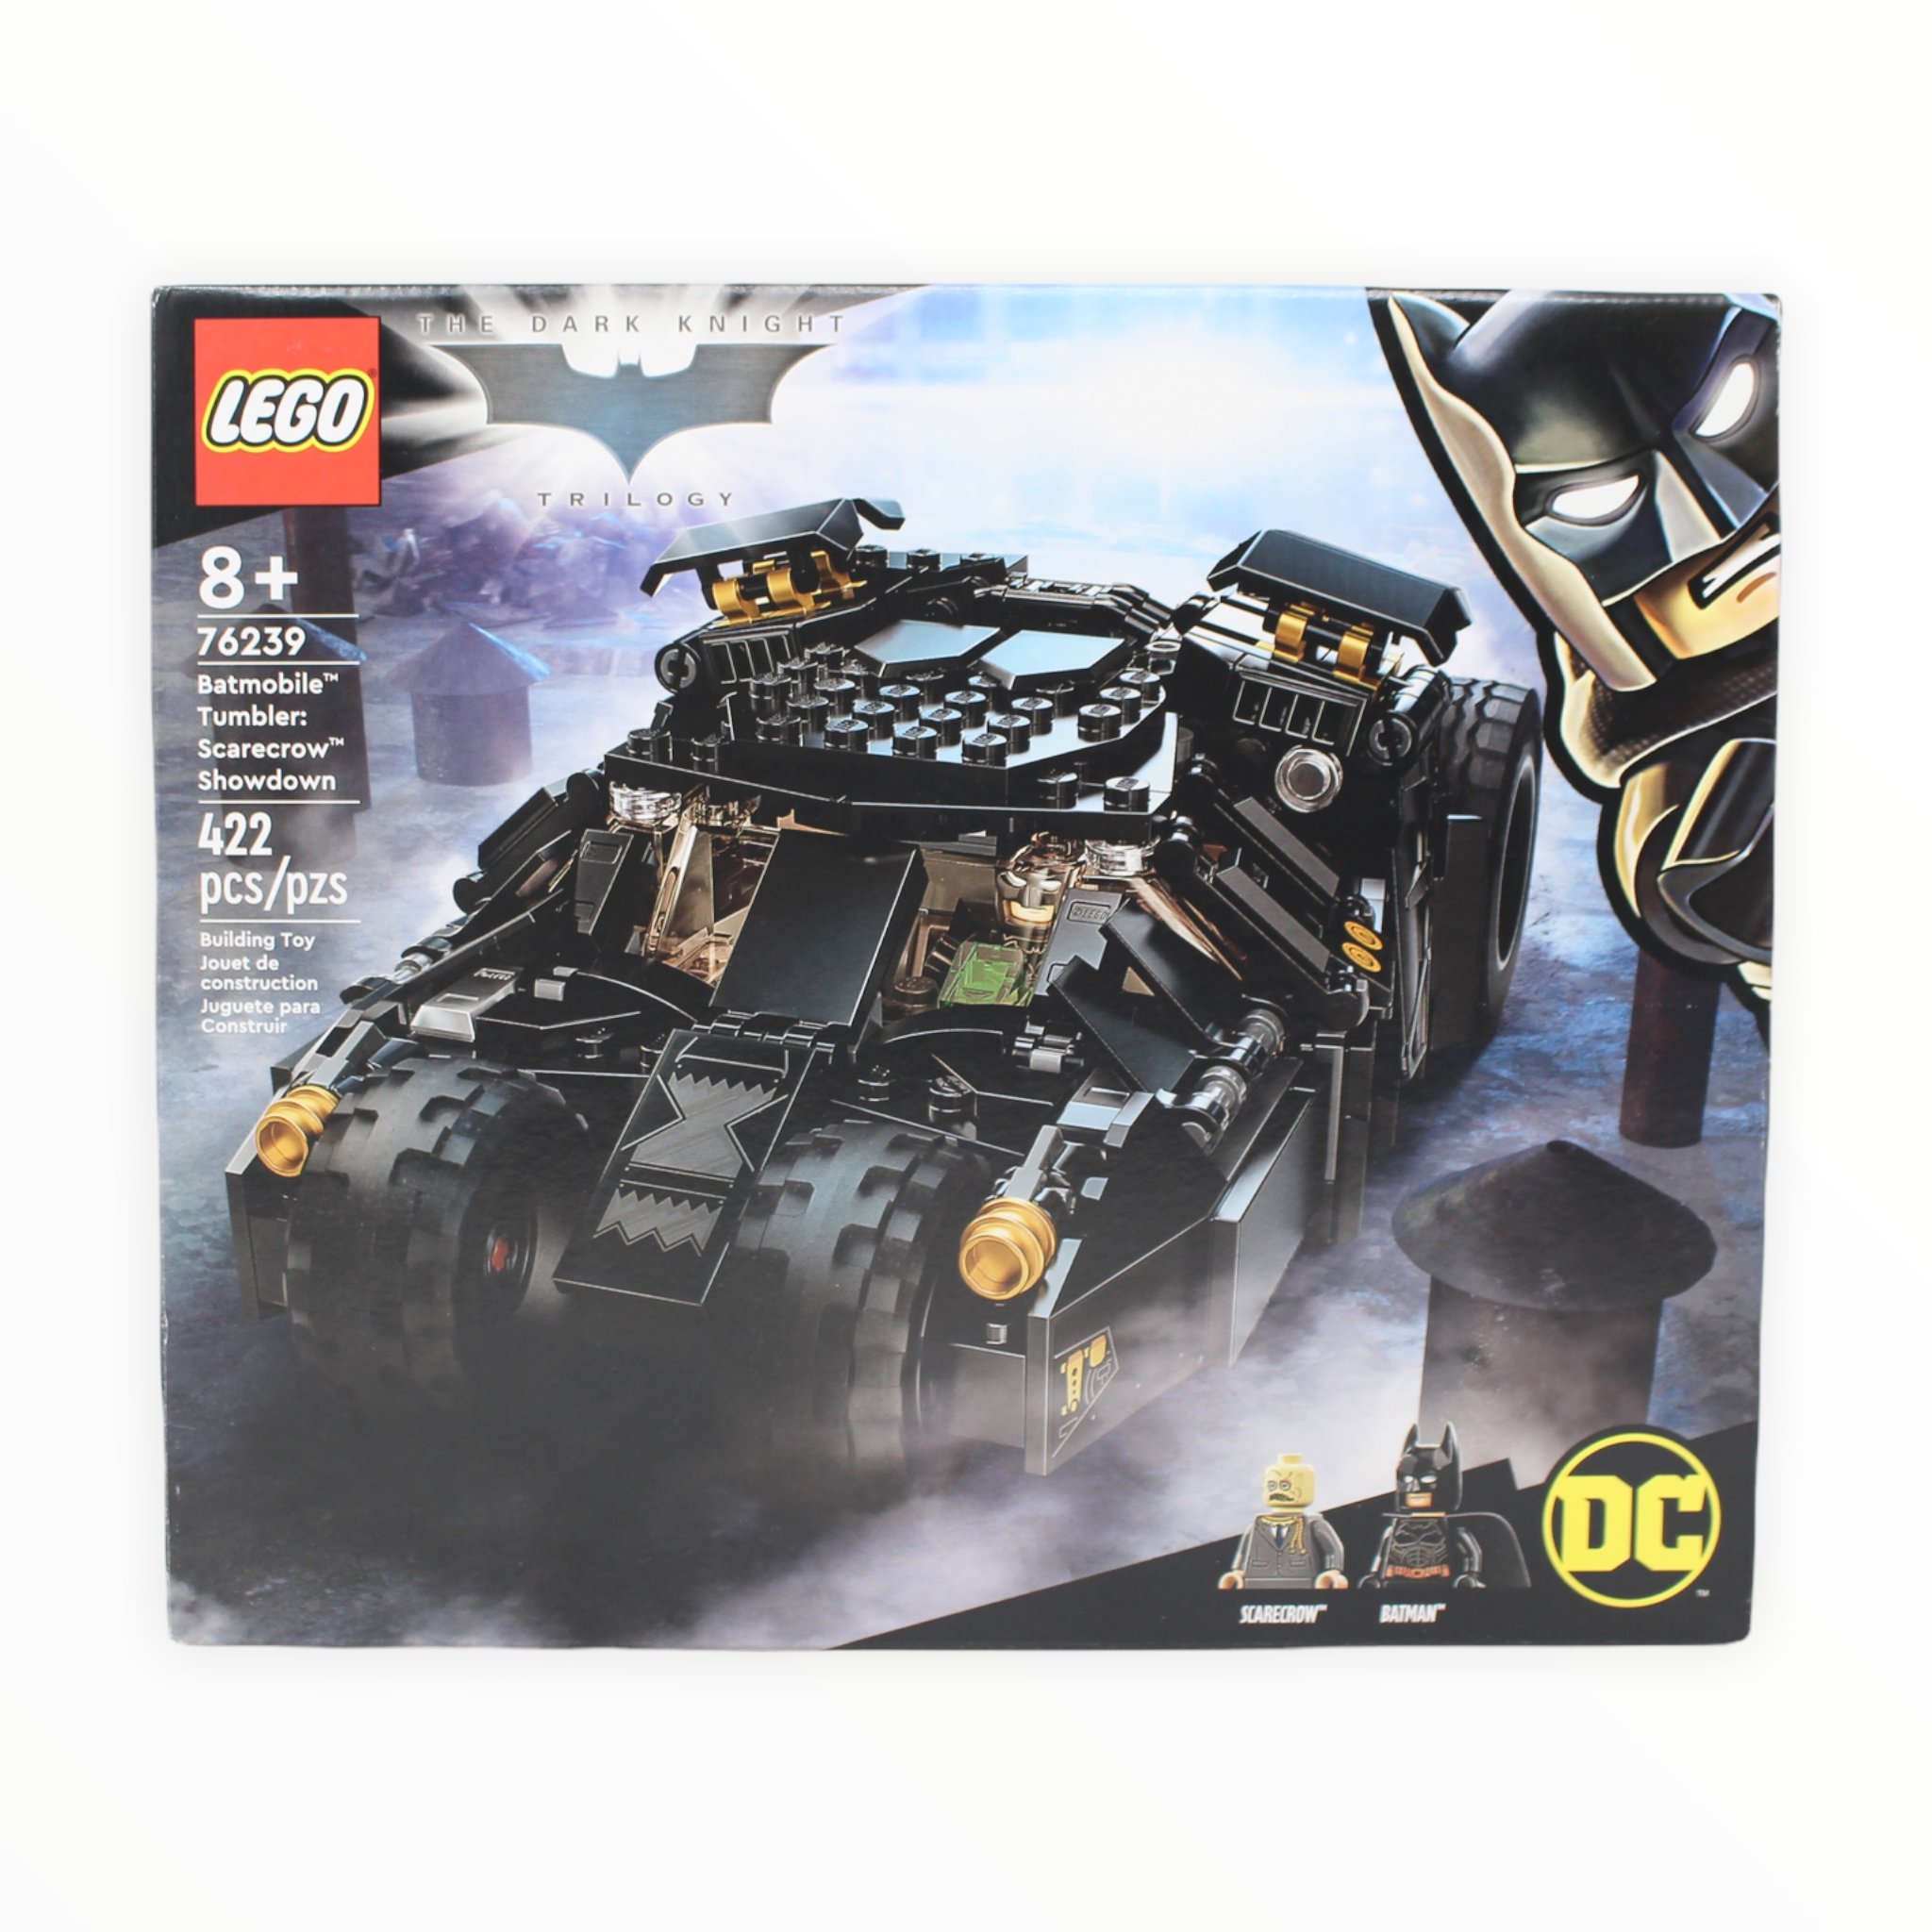 Certified Used Set 76239 The Dark Knight Trilogy Batmobile Tumbler: Scarecrow Showdown